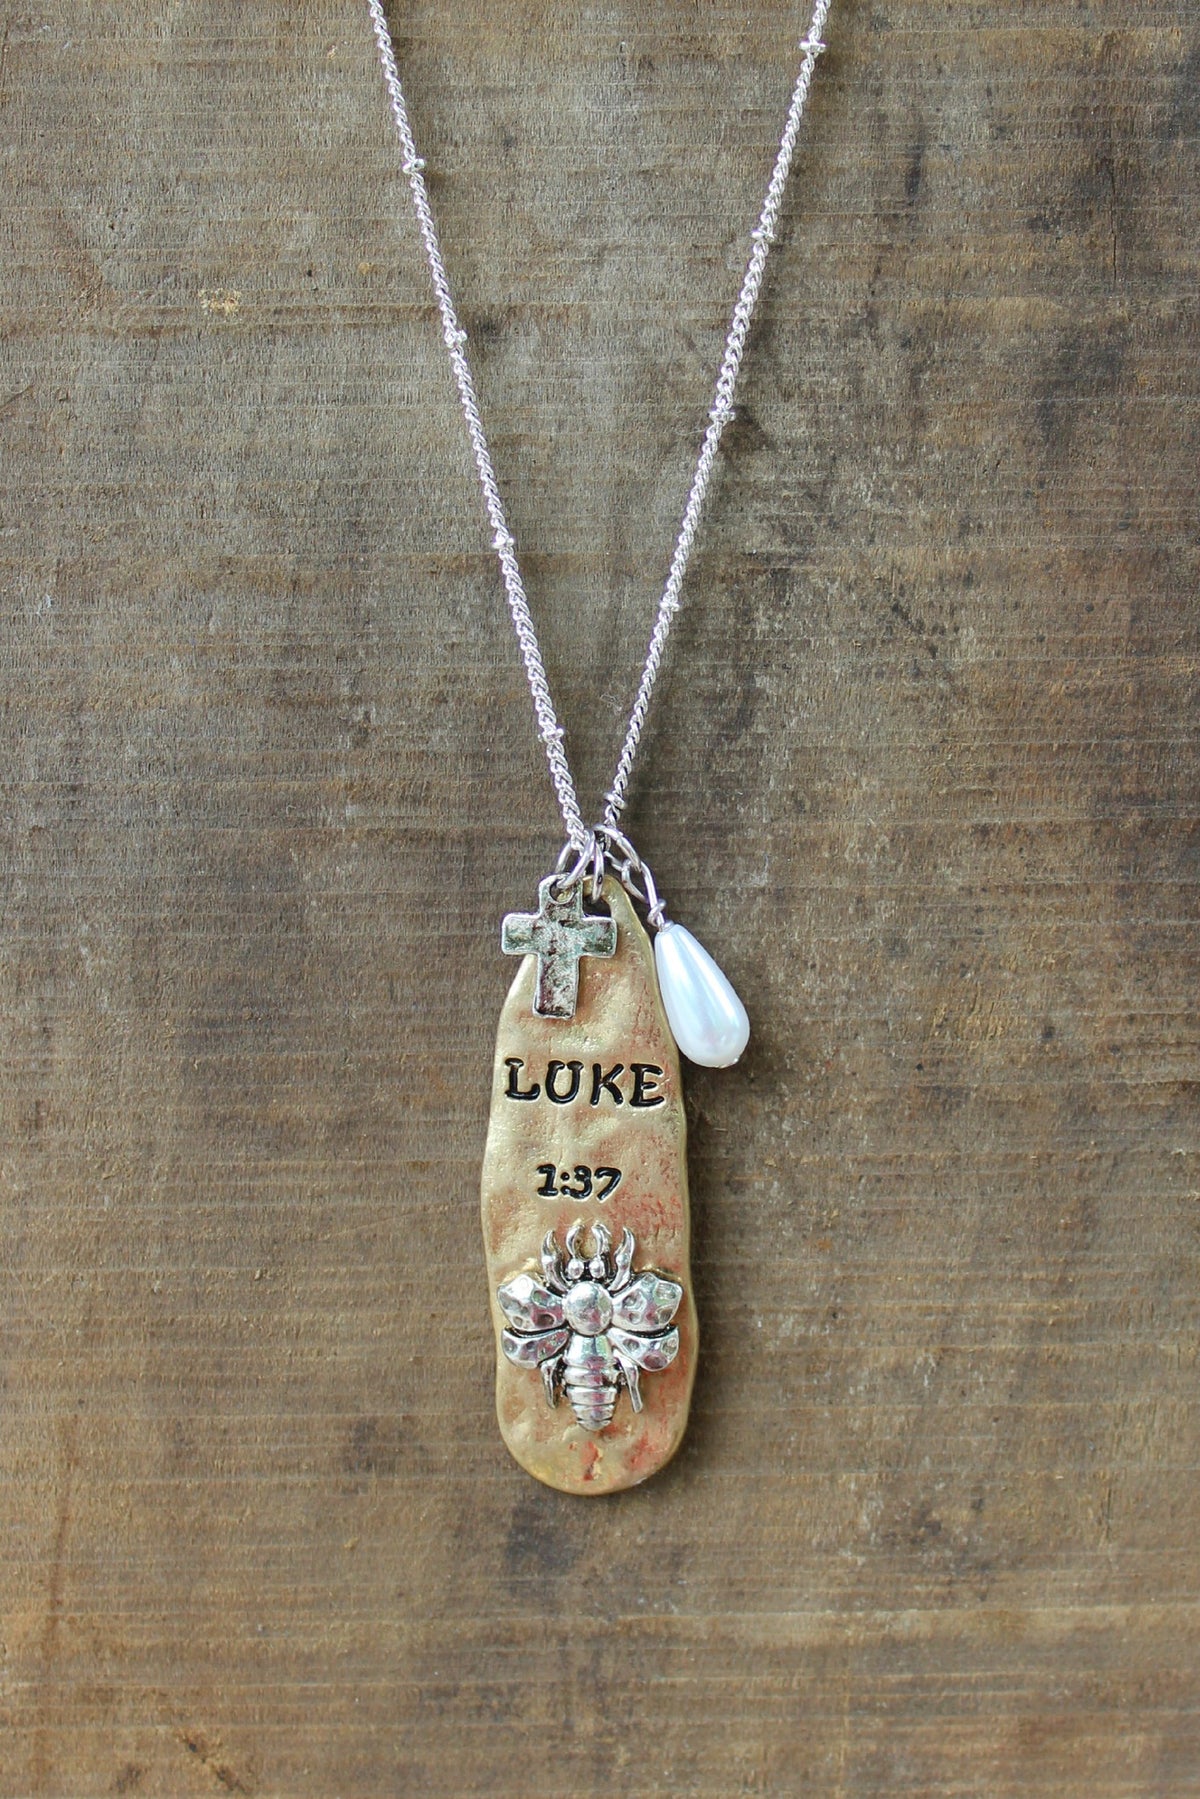 Luke 1:37 Necklace, Gold